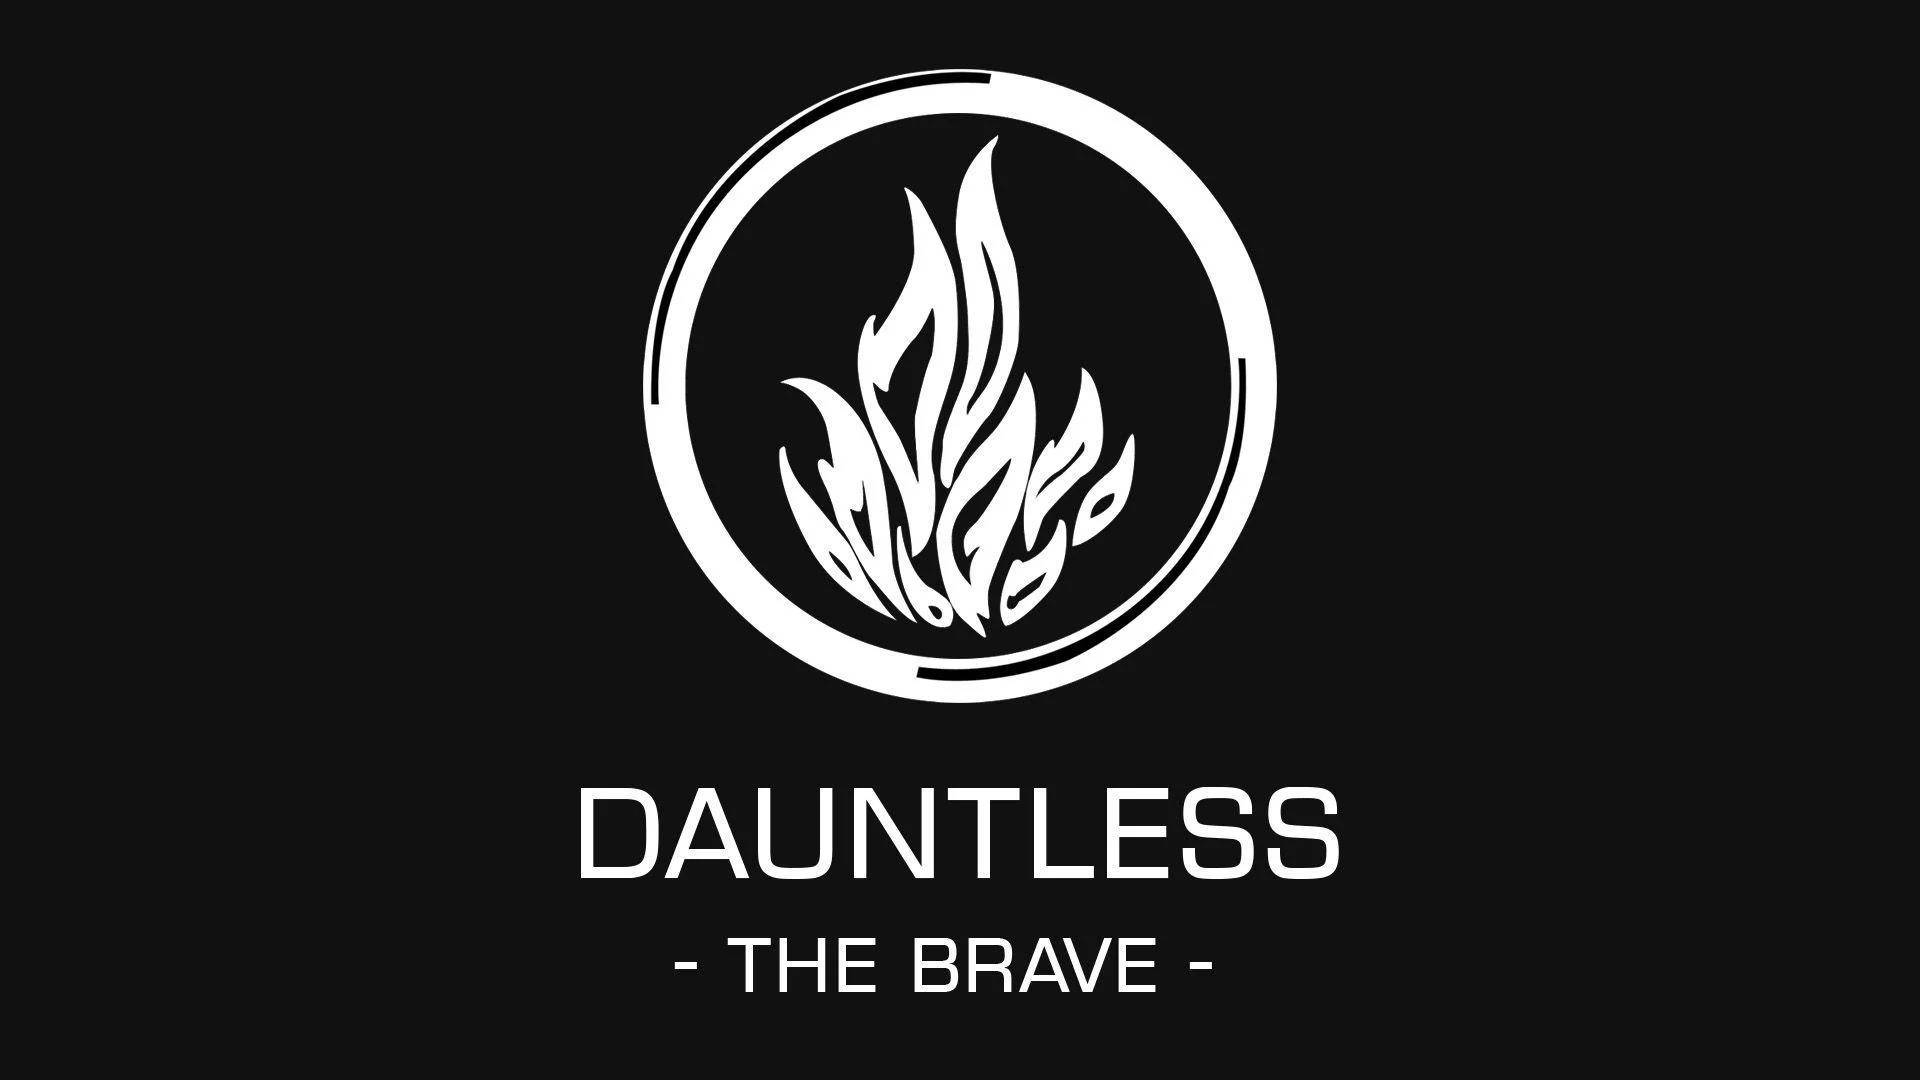 Divergent Dauntless Black Background Wallpaper